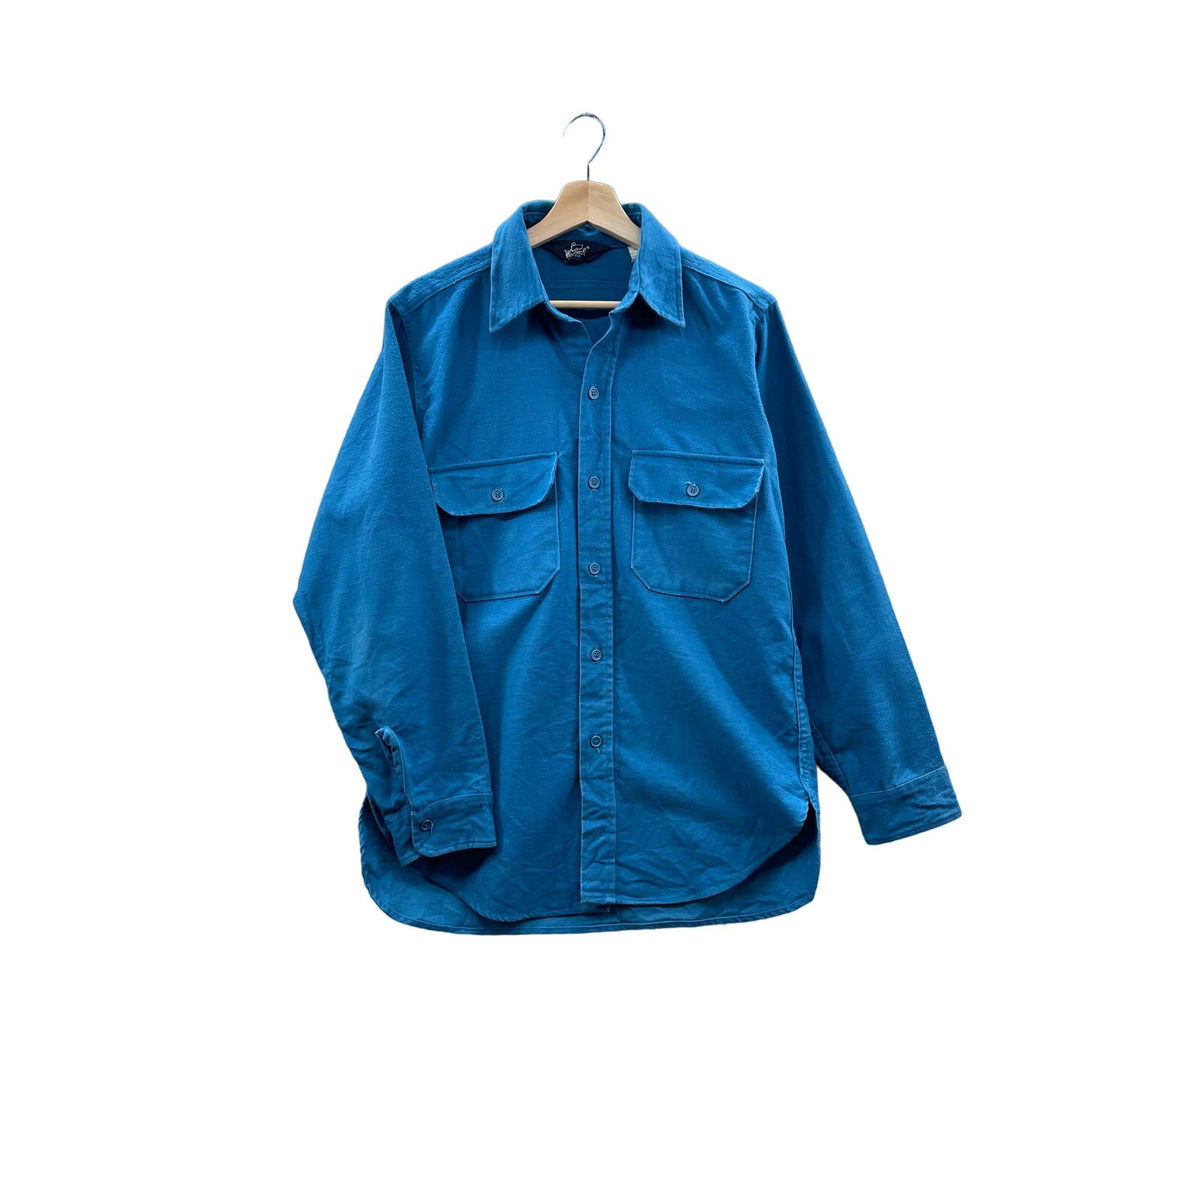 Vintage 1990's Woolrich Men's Blue Twill Canvas Button Up L/S Shirt